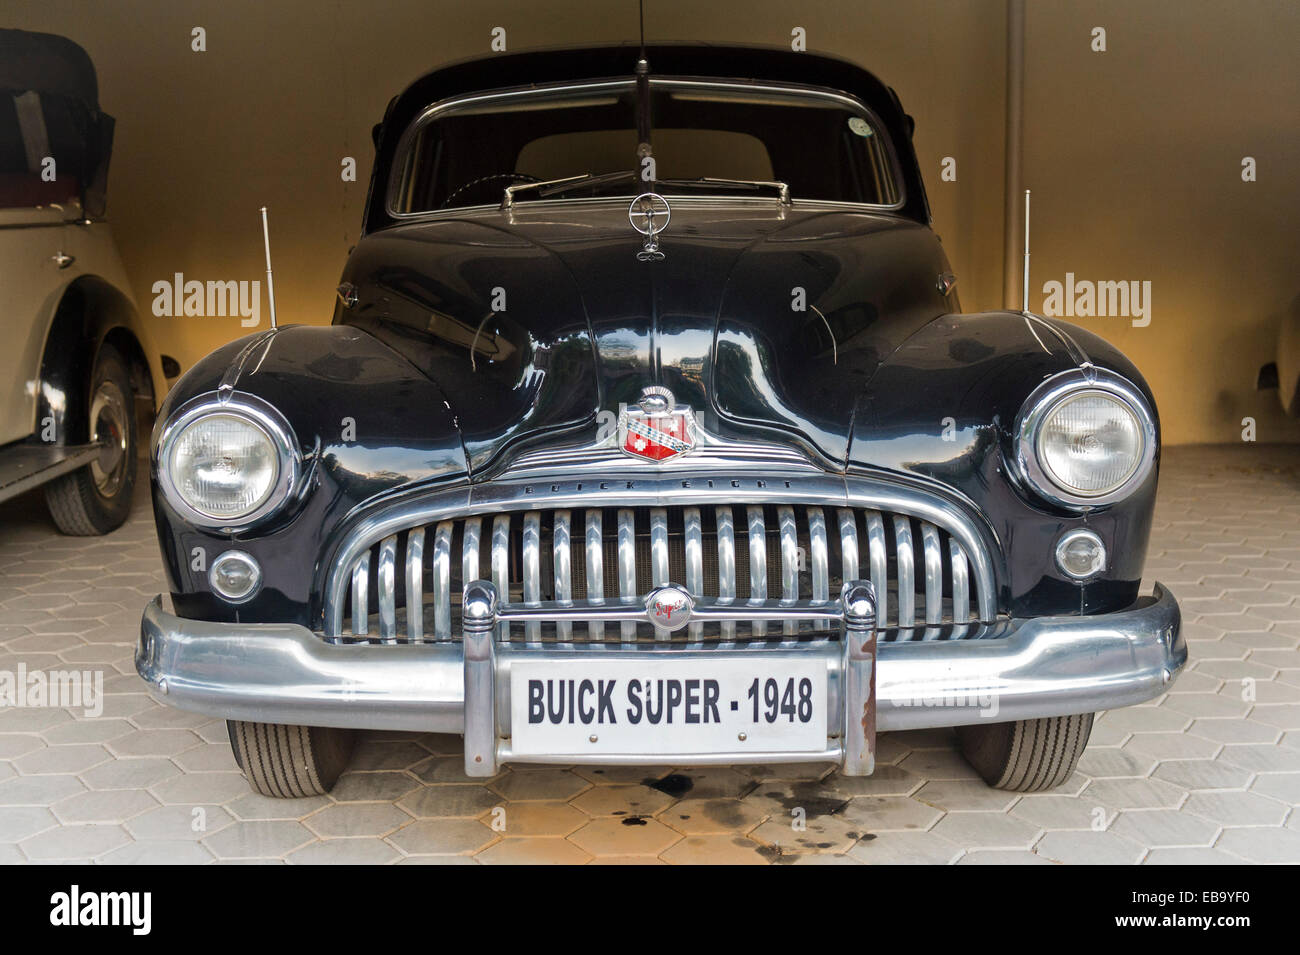 Vintage Buick Super, built in 1948, Jodhpur, Rajasthan, India Stock Photo